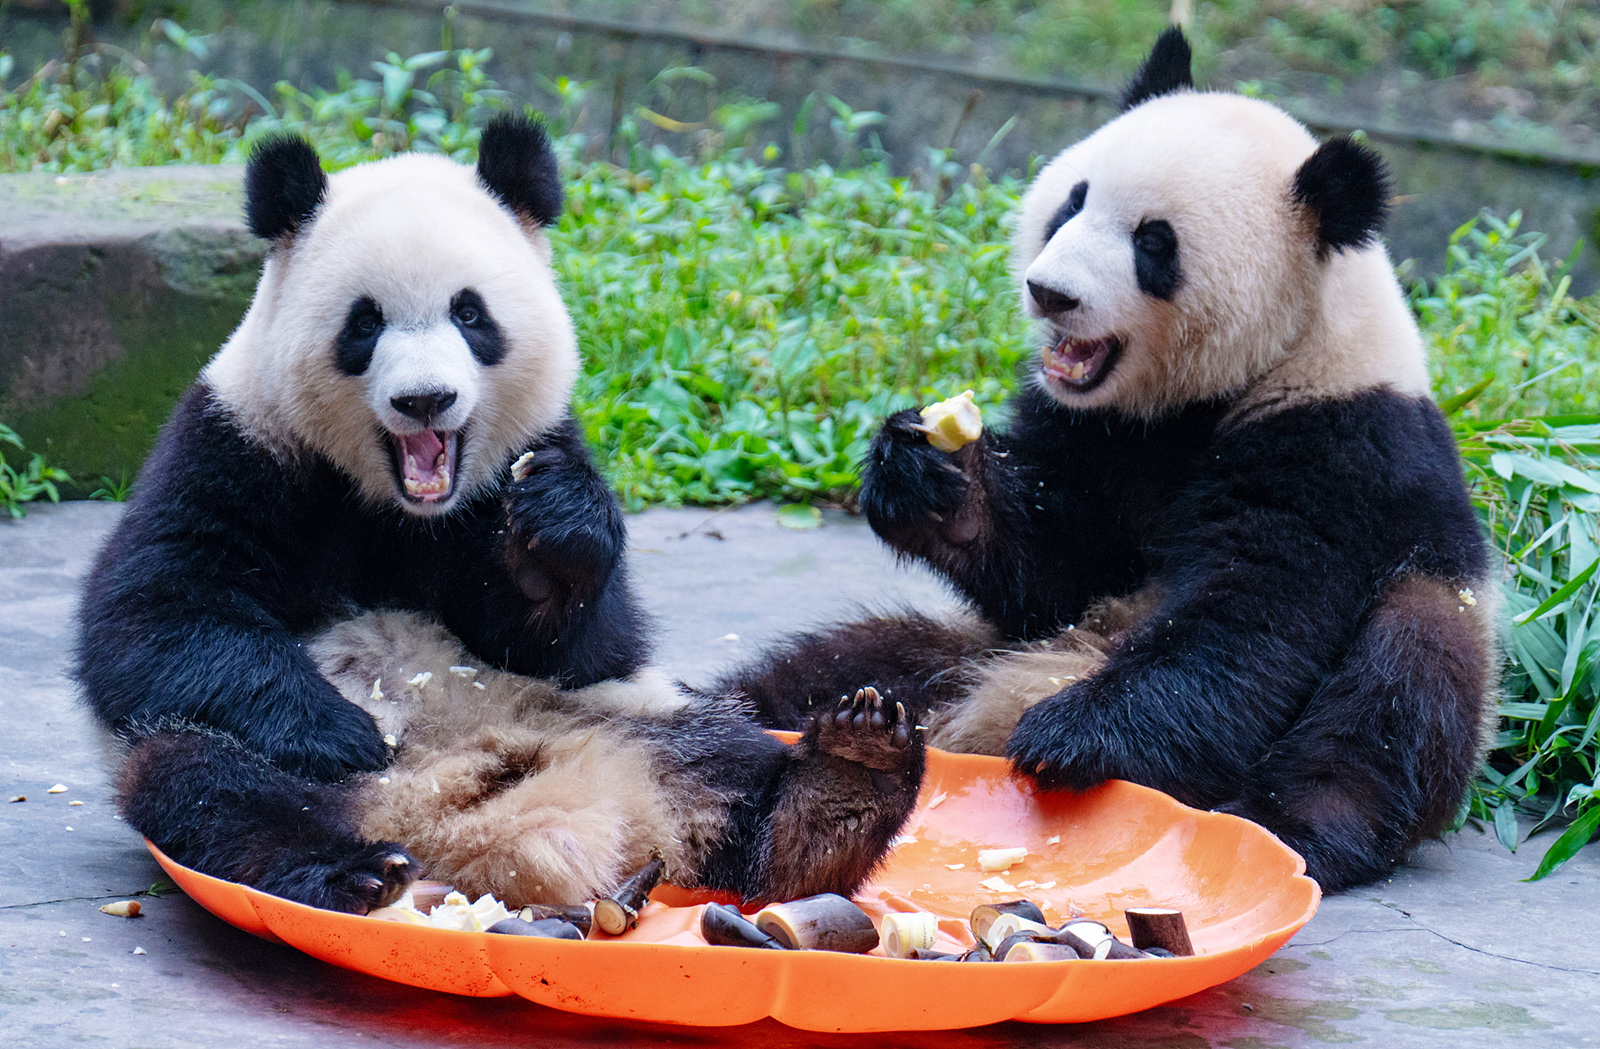 Pandas enjoy bamboo shoots at Chongqing Zoo. /CFP